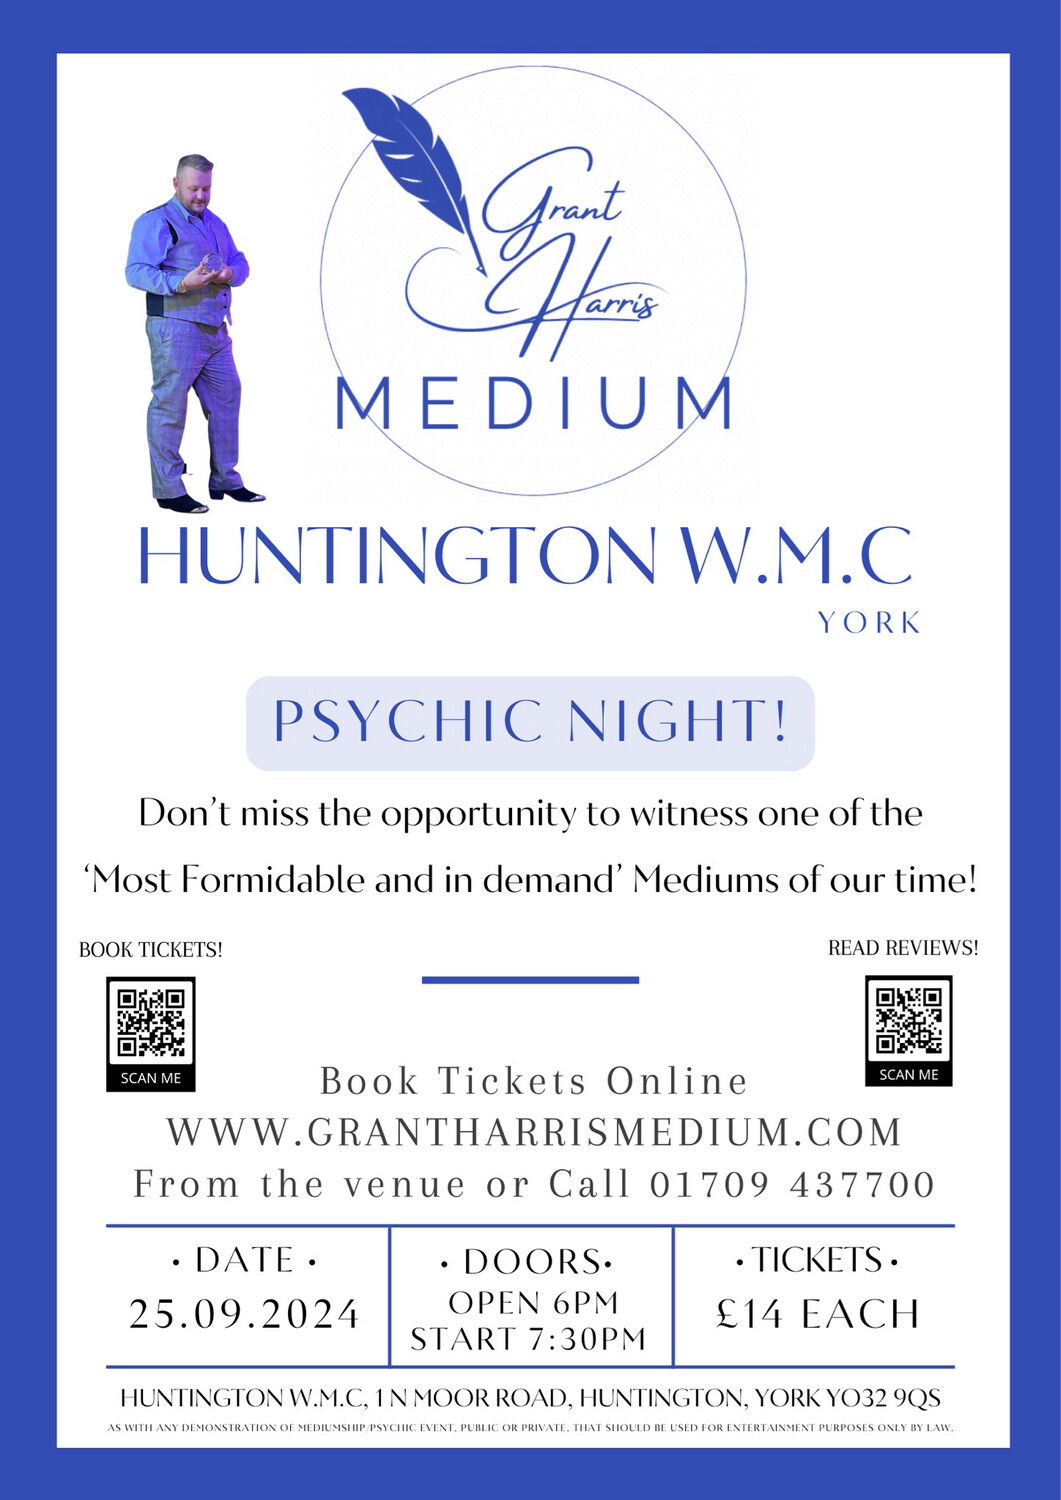 Psychic Night | Huntington W.M.C, York, Wed 25th September 2024